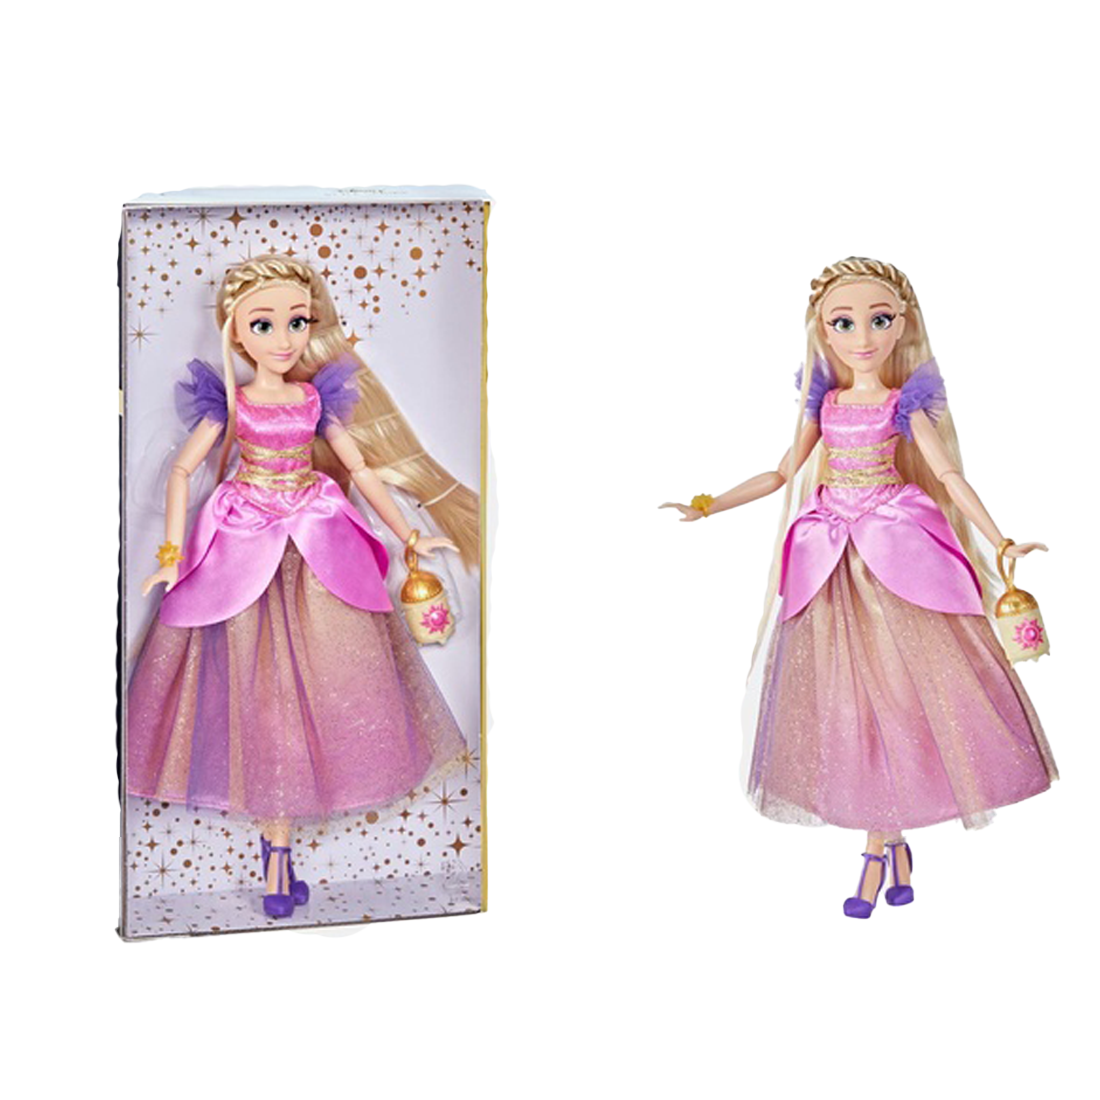 Disney Princess Style Series, Rapunzel  Doll